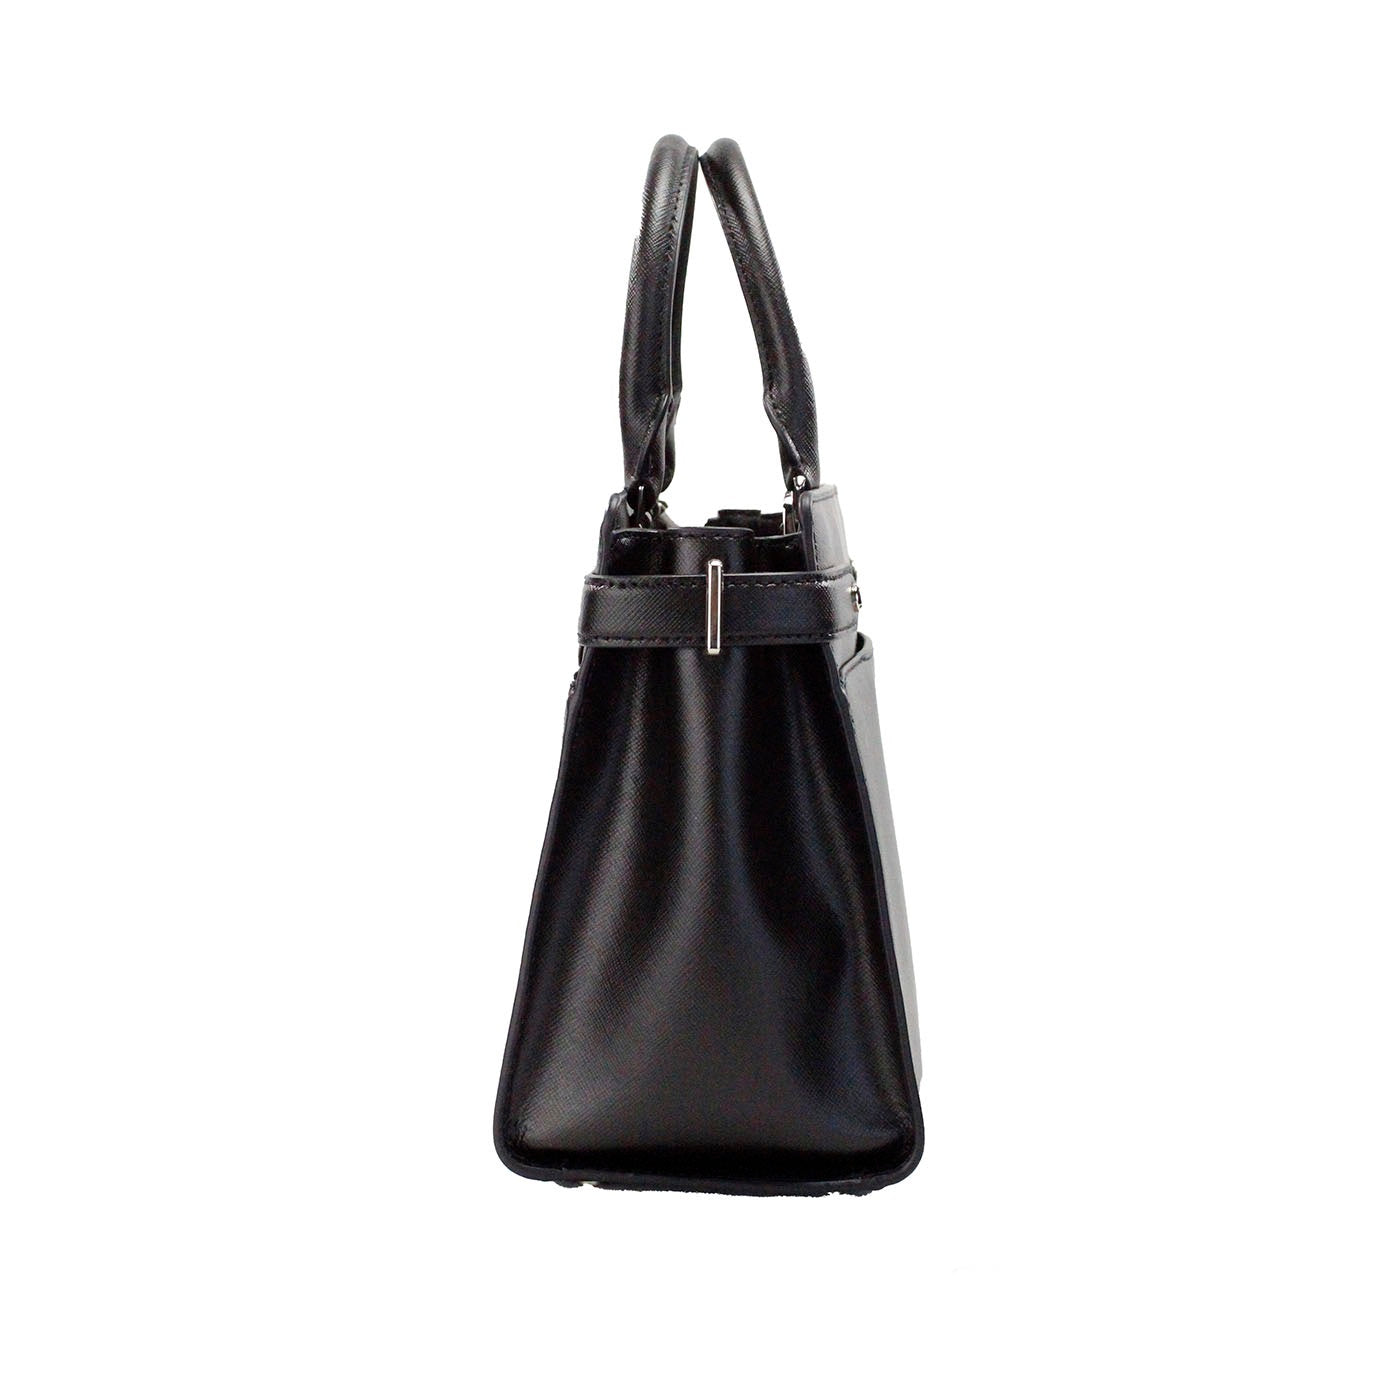 Kate Spade Staci Medium Black Saffiano Leather Crossbody Satchel Bag